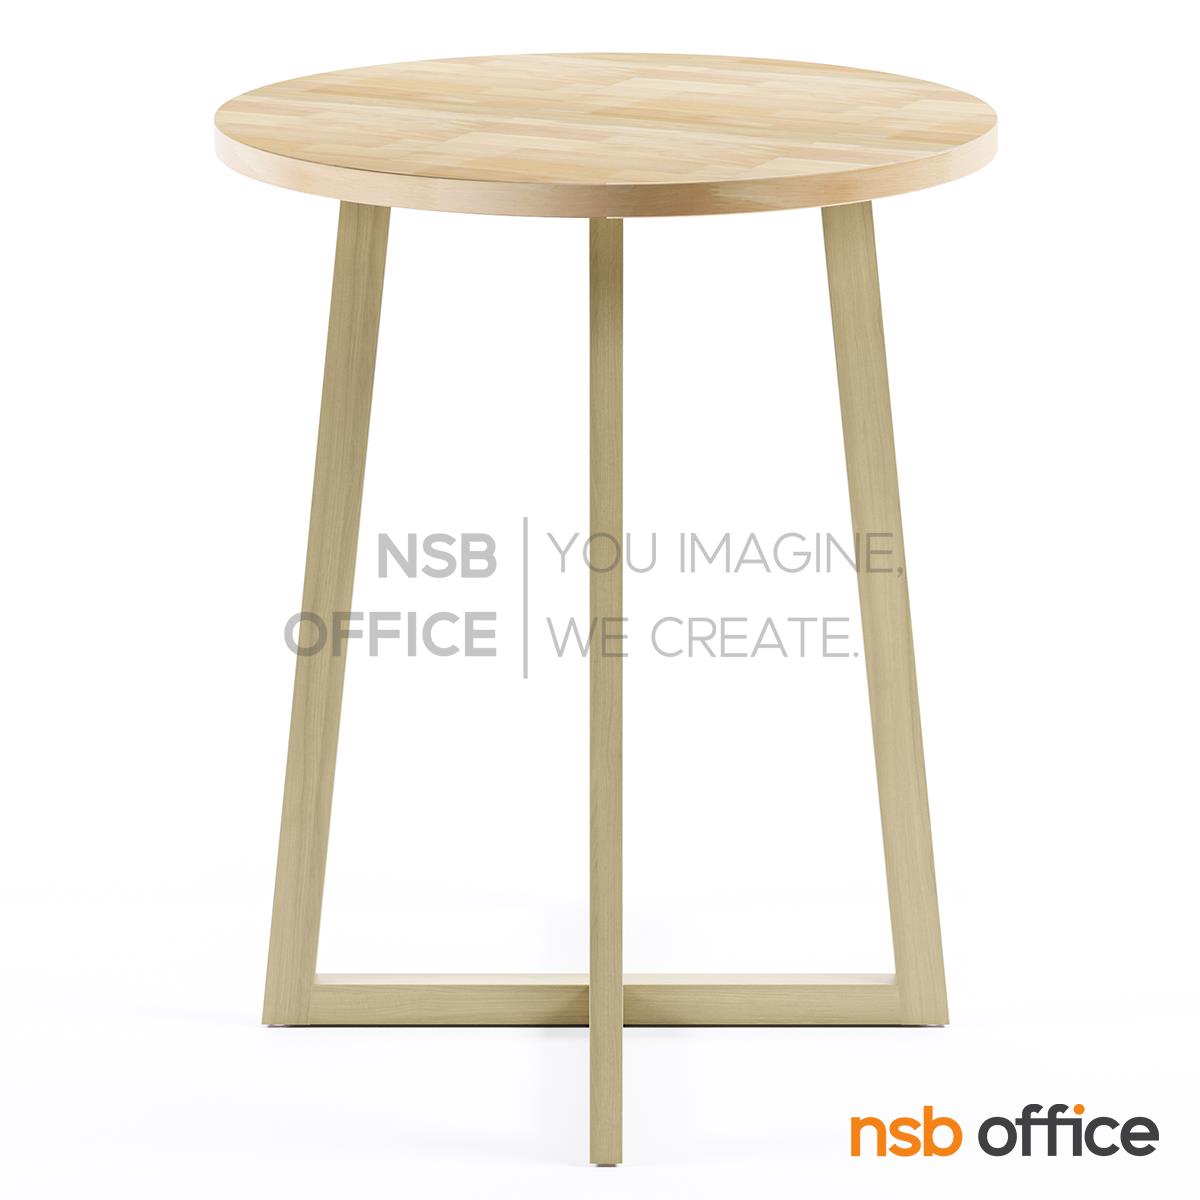 G20A049:โต๊ะบาร์กลม รุ่น Nano (นาโน) ขนาด 60Di cm. ขาไม้ 4 แฉก